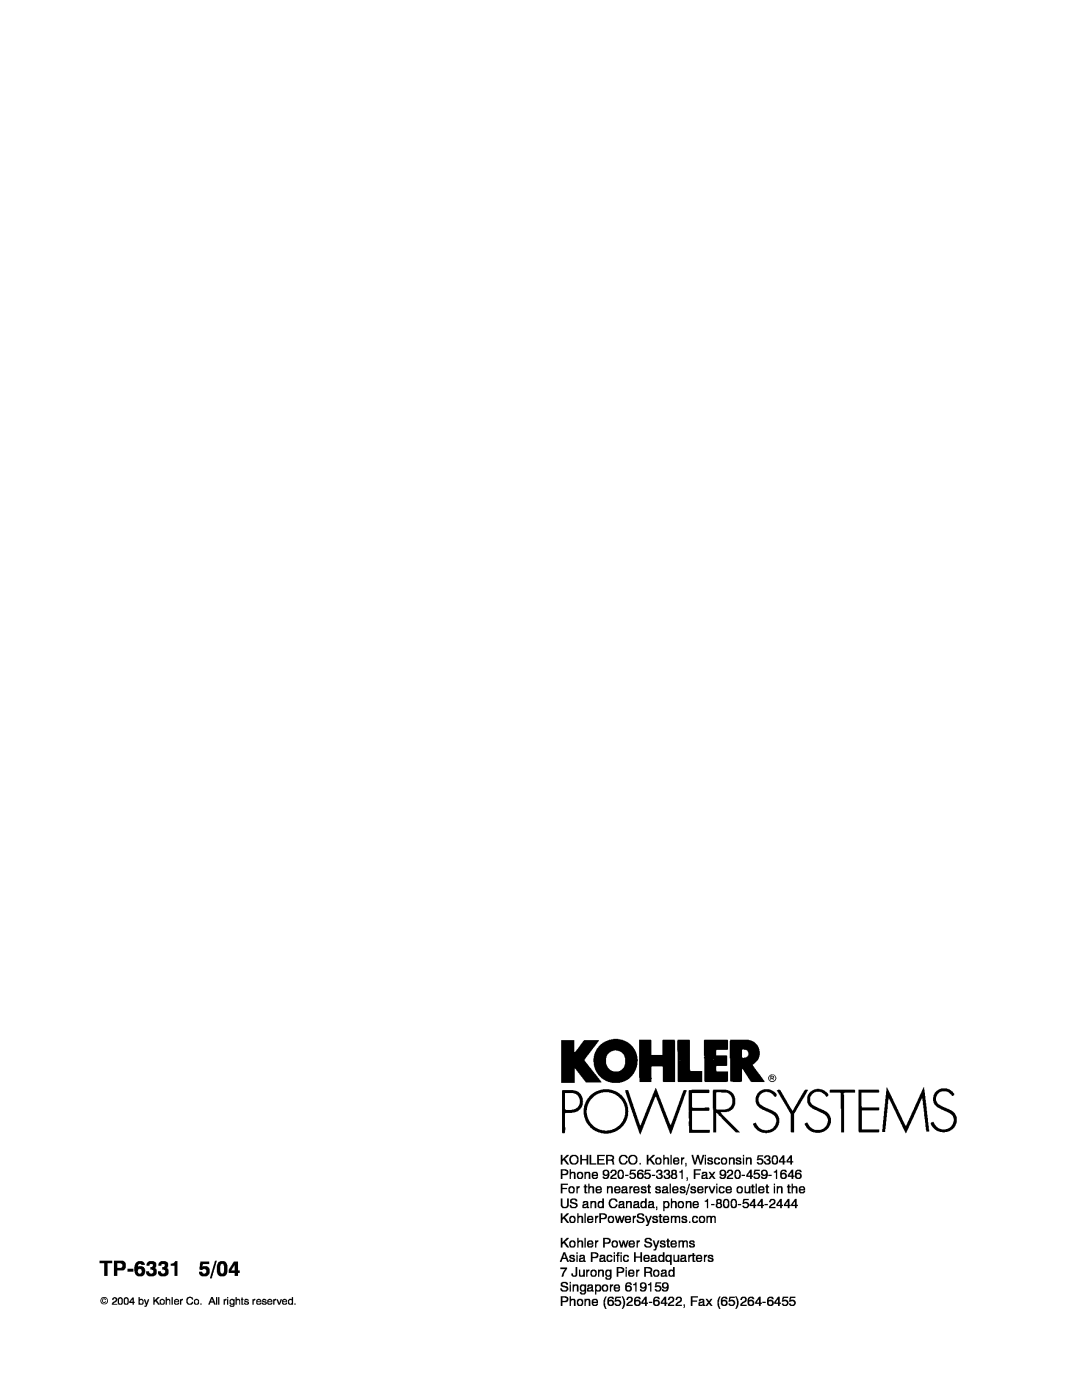 Kohler 8.5RES TP-63315/04, Kohler Power Systems Asia Pacific Headquarters, Jurong Pier Road Singapore Phone 65264-6422,Fax 